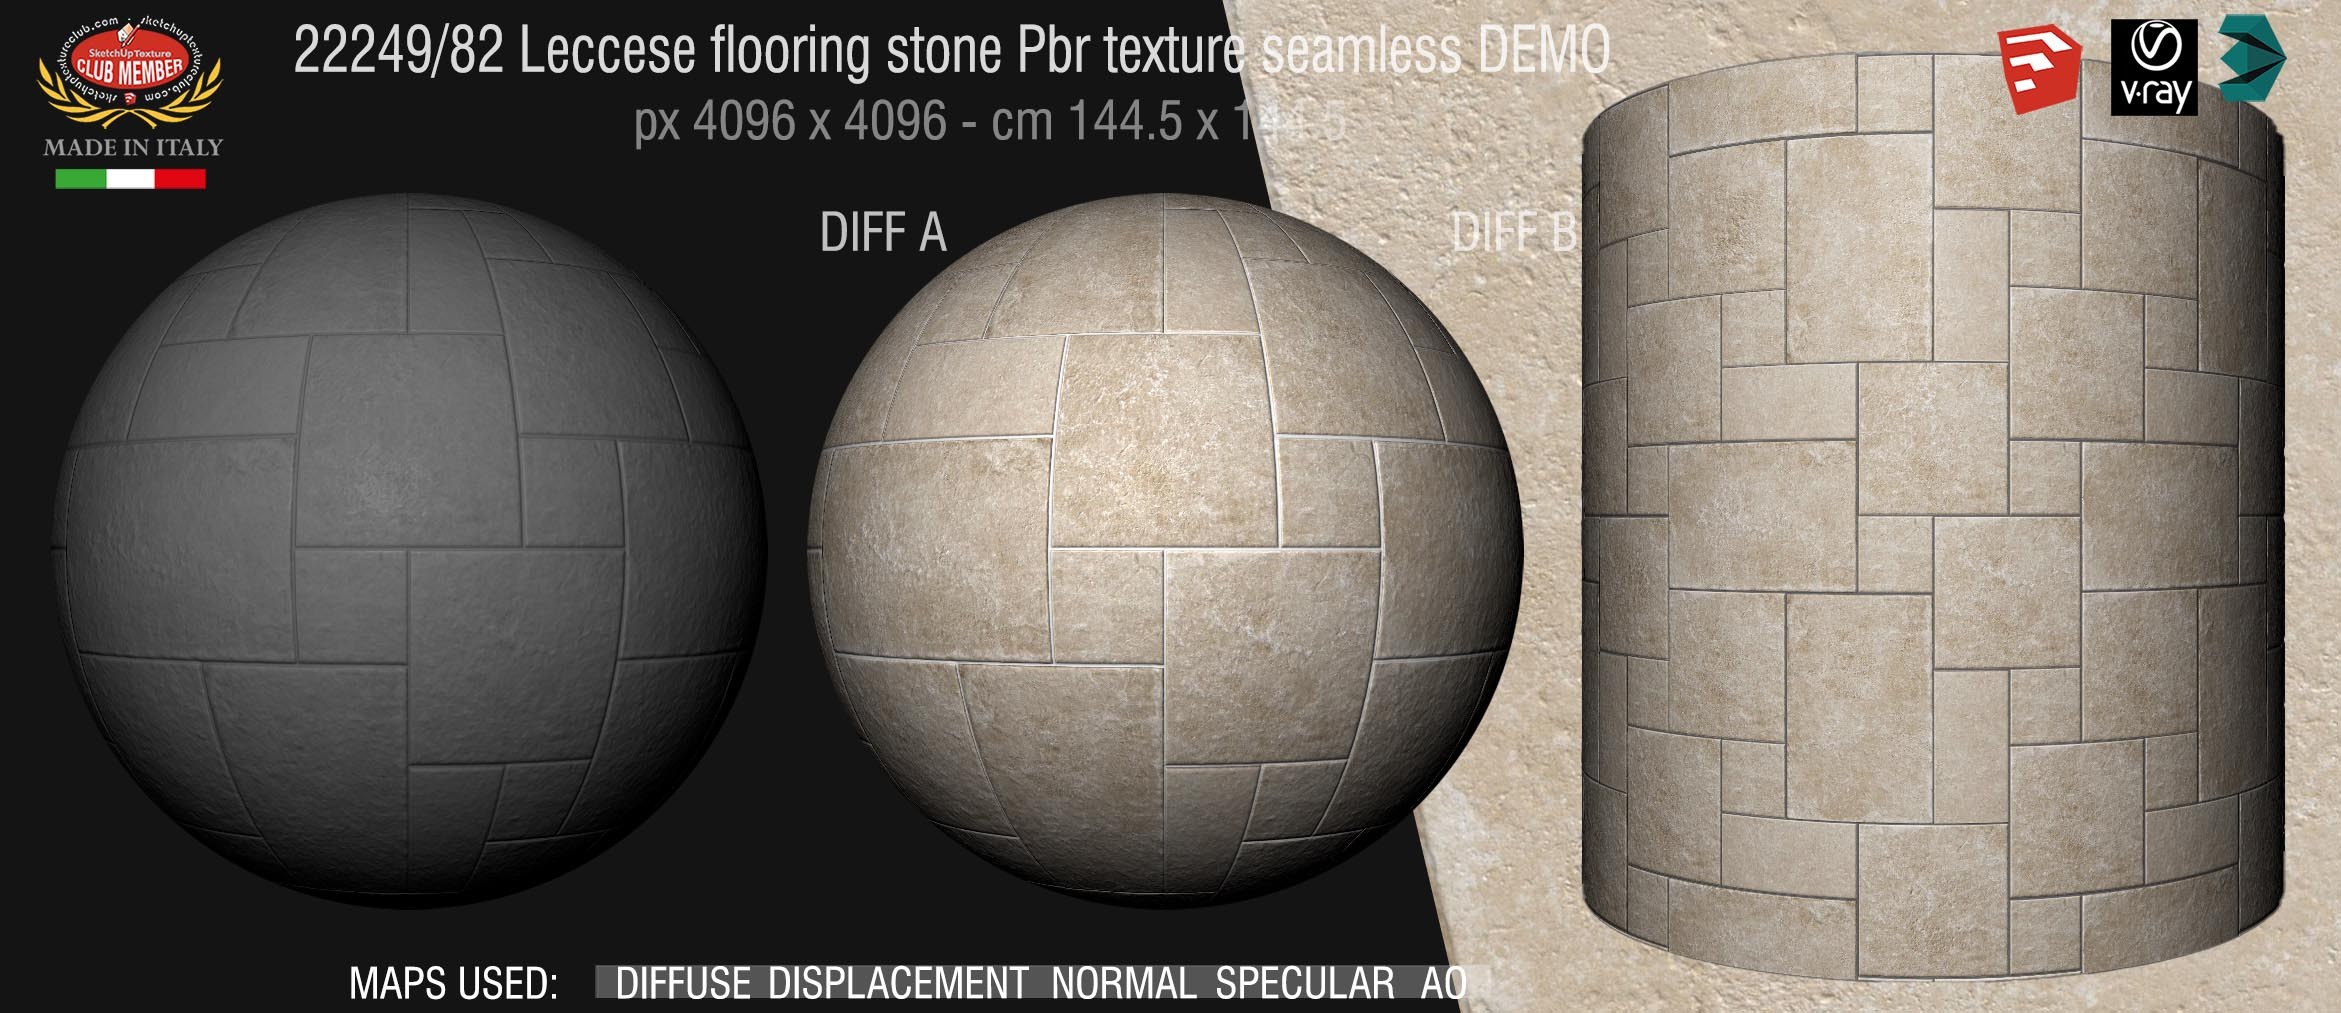 22249_82 Leccese flooring stone Pbr texture seamless DEMO / limestone